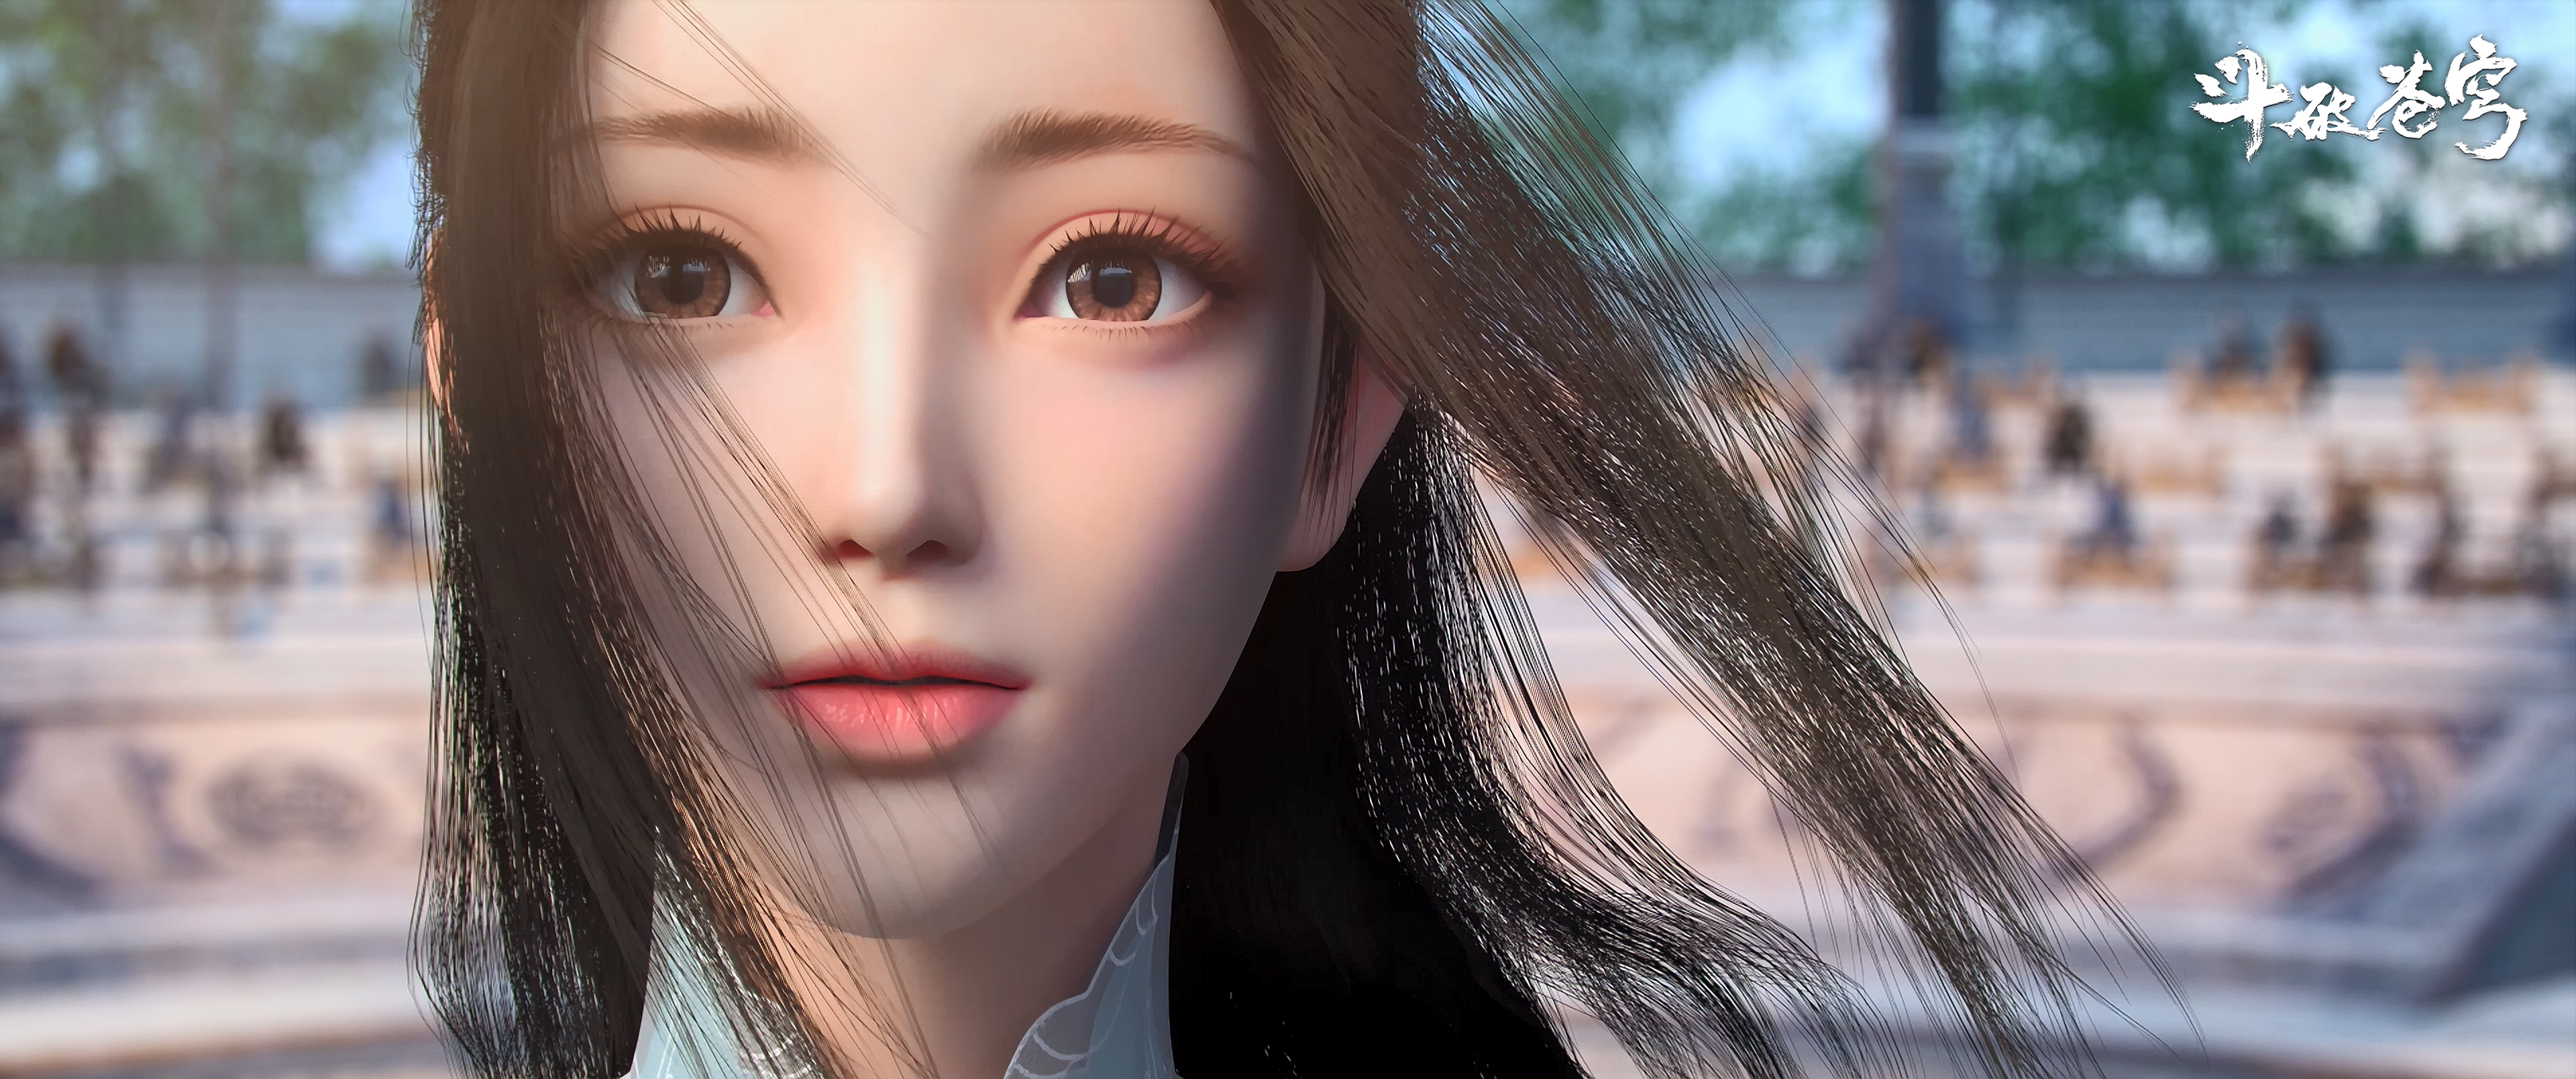 General 3840x1608 Battle Through the Heavens Xiao xun er Asian women long hair looking at viewer CGI blurred blurry background